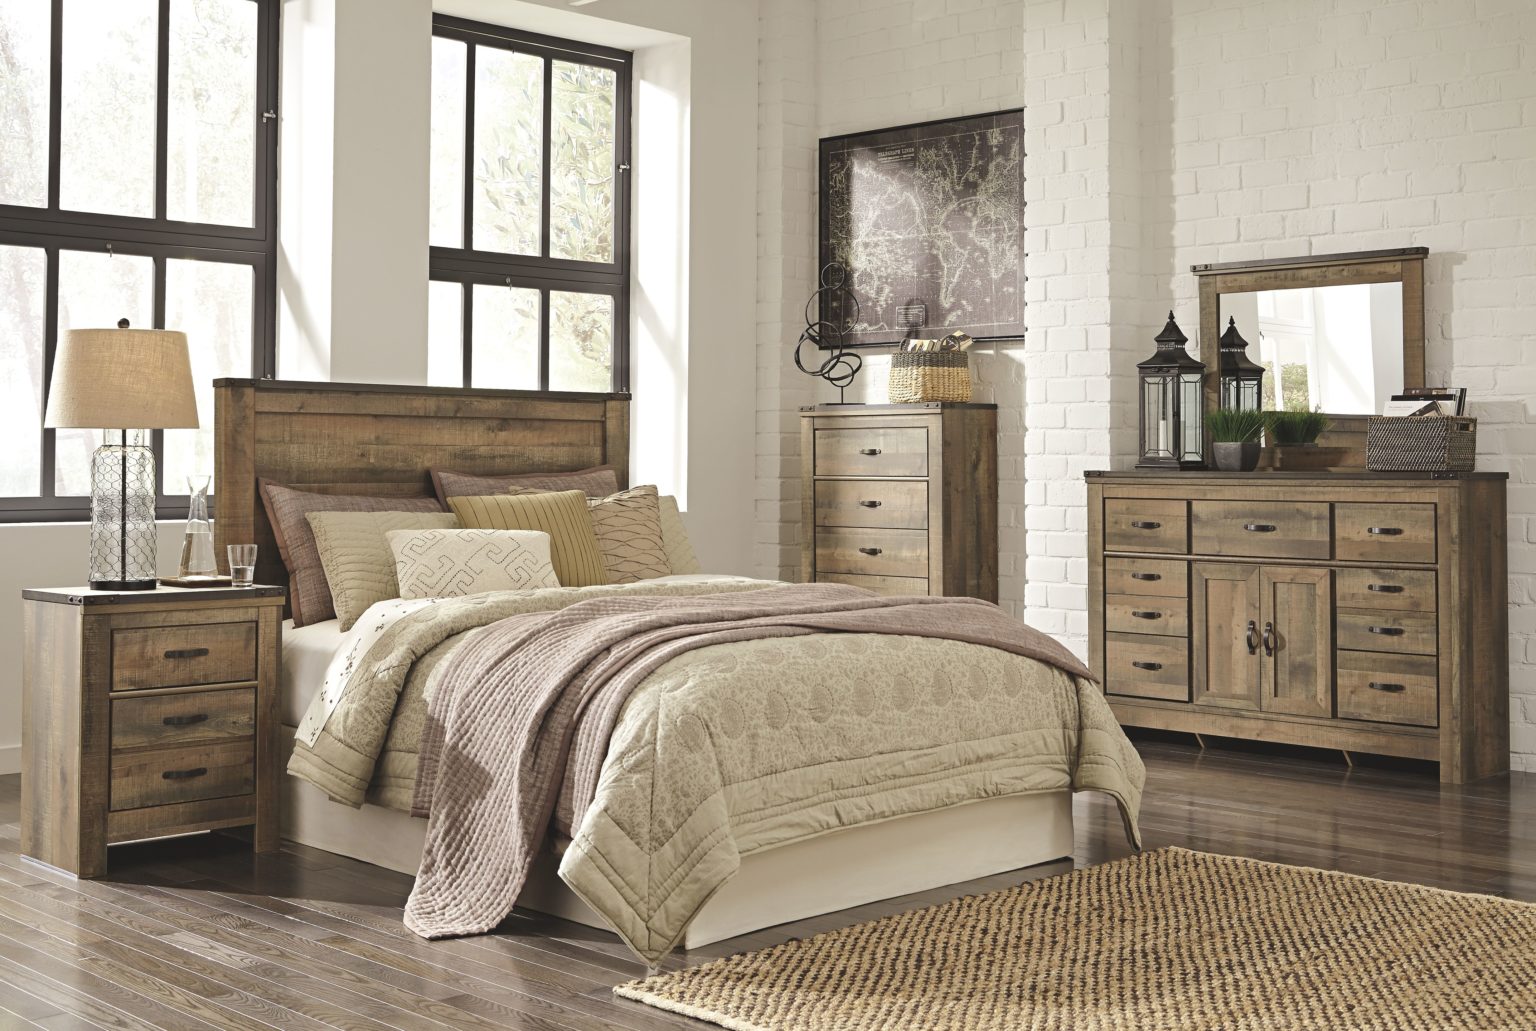 ashley signature bedroom furniture canada